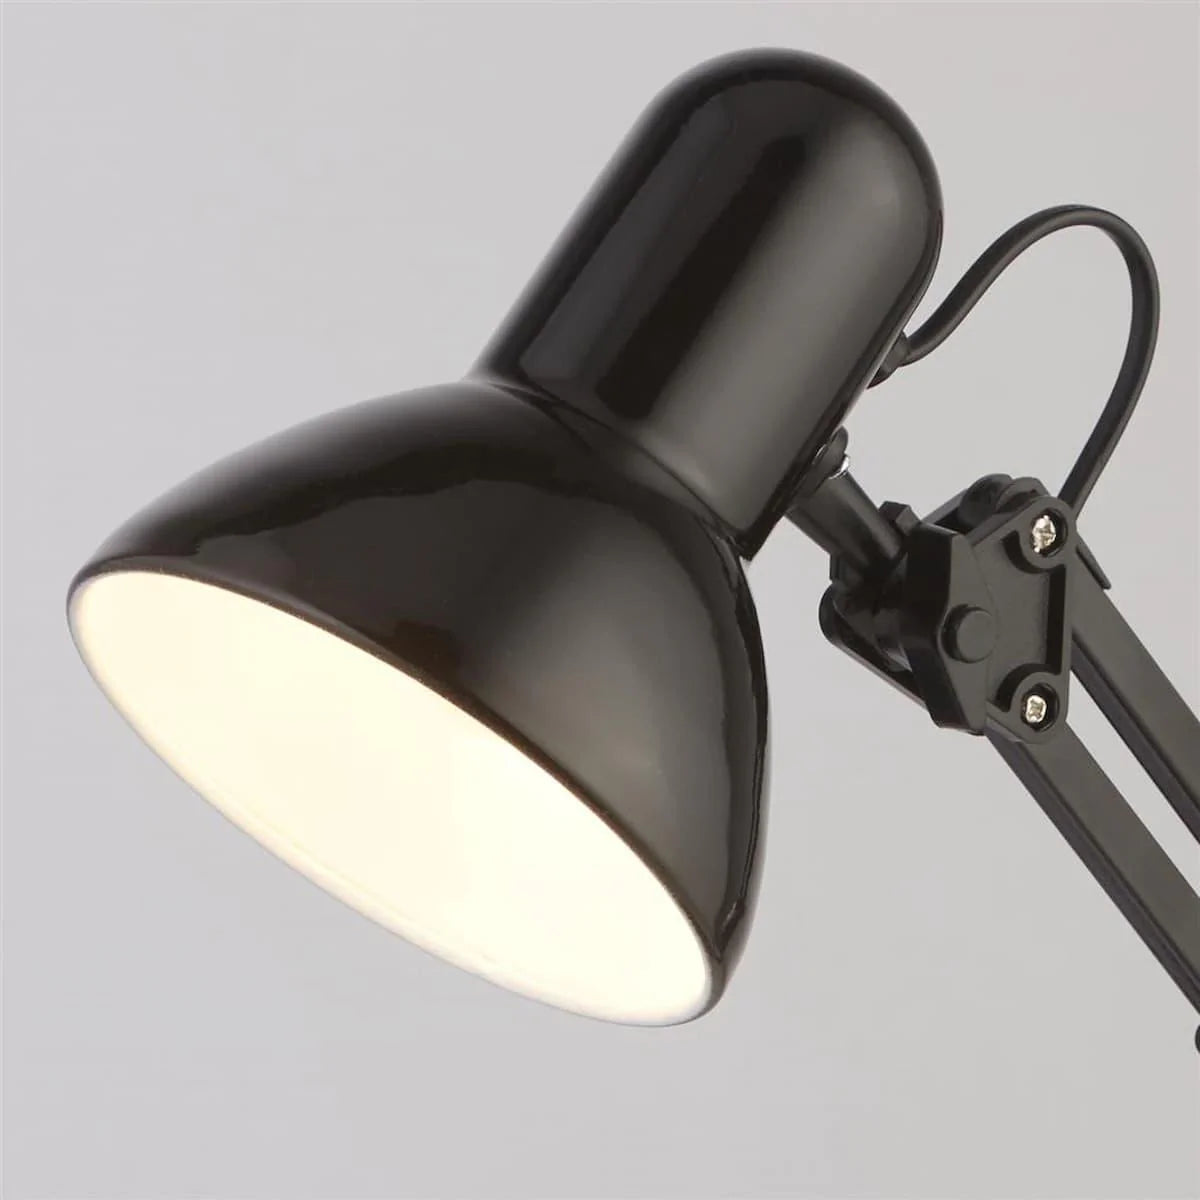 SHINY BLACK HOBBY TABLE LAMP ADJUSTABLE |2429BK - Peter Murphy Lighting & Electrical Ltd